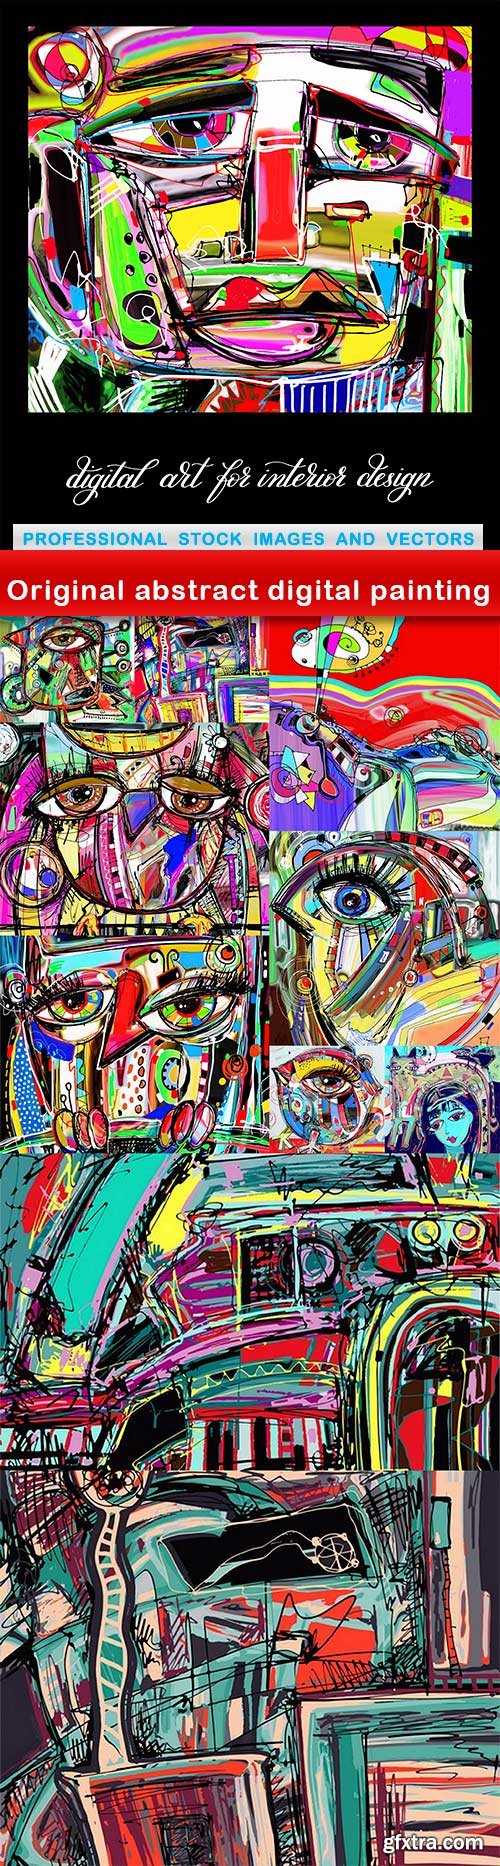 Original abstract digital painting - 11 EPS